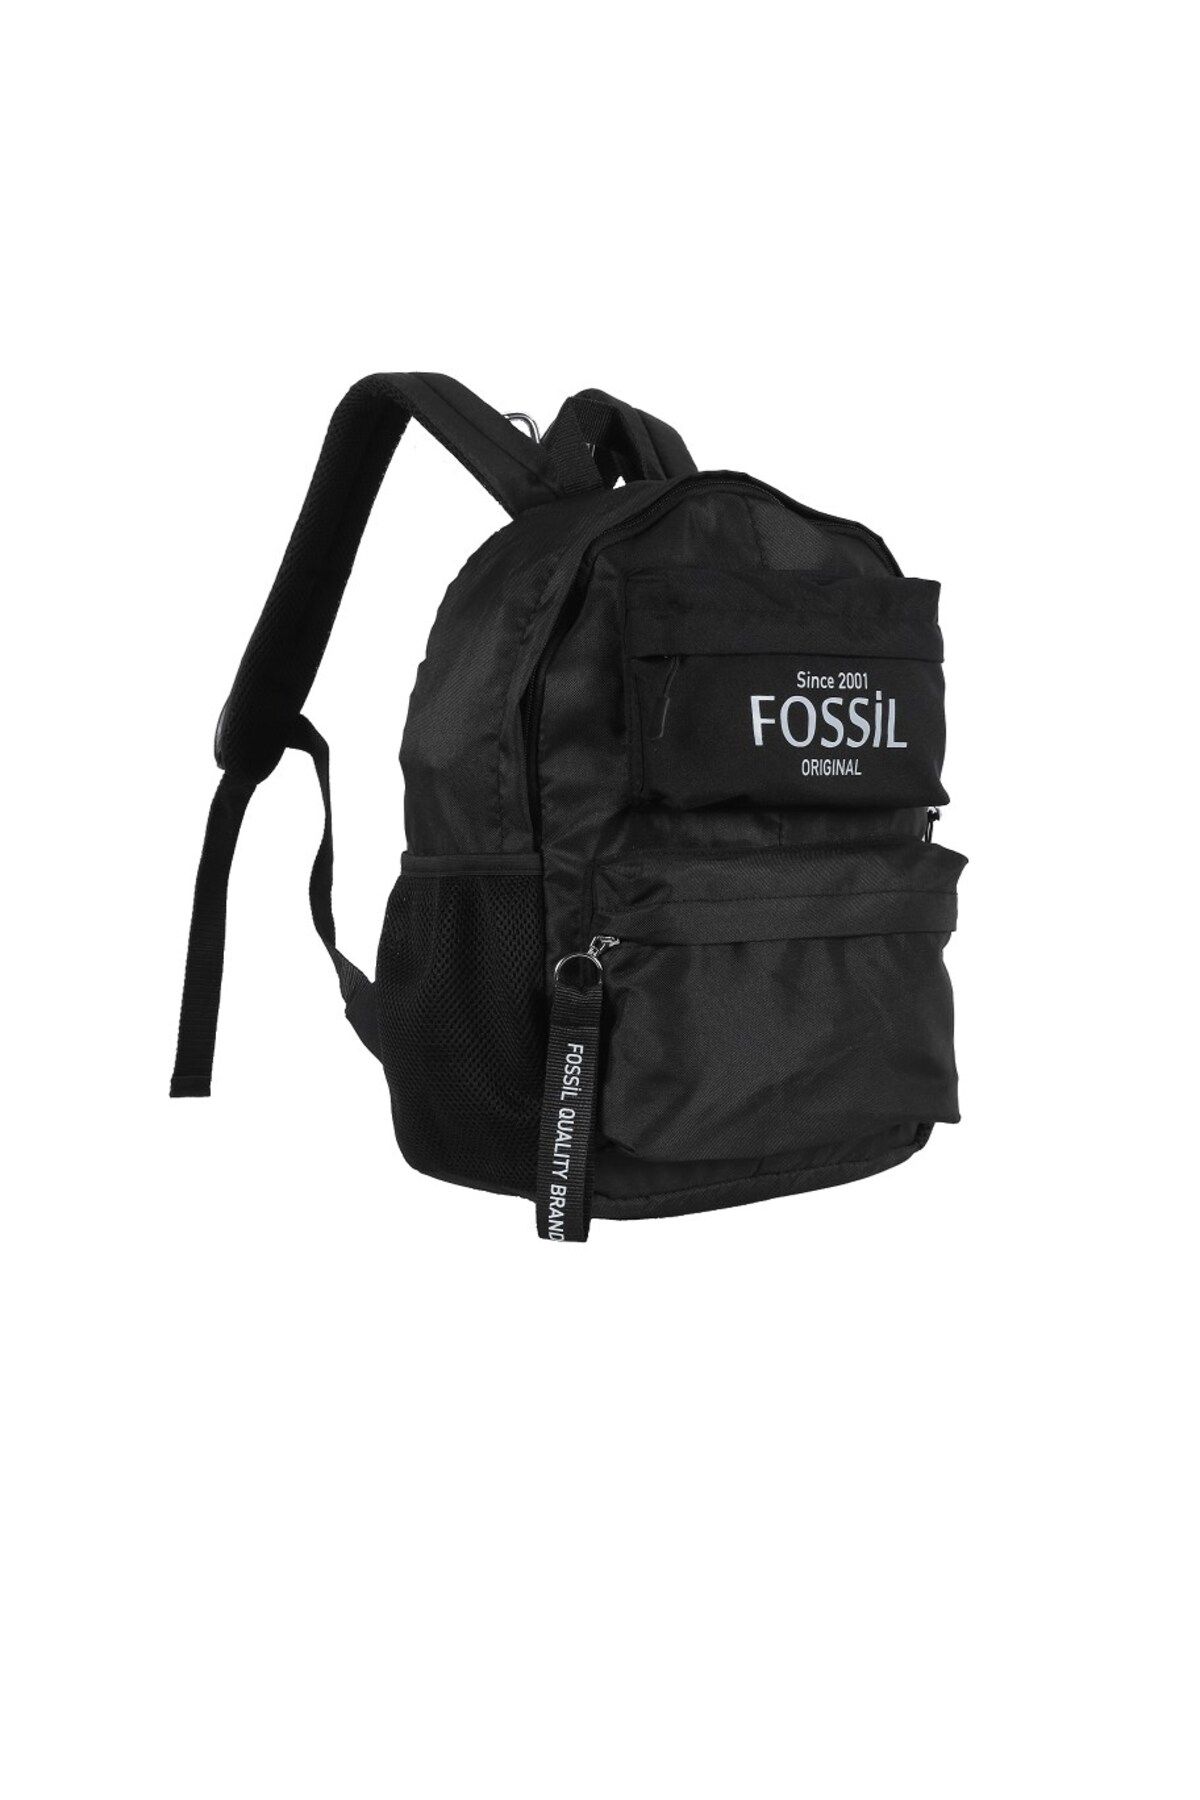 Fossil Okul Sırt Çantası- 9512